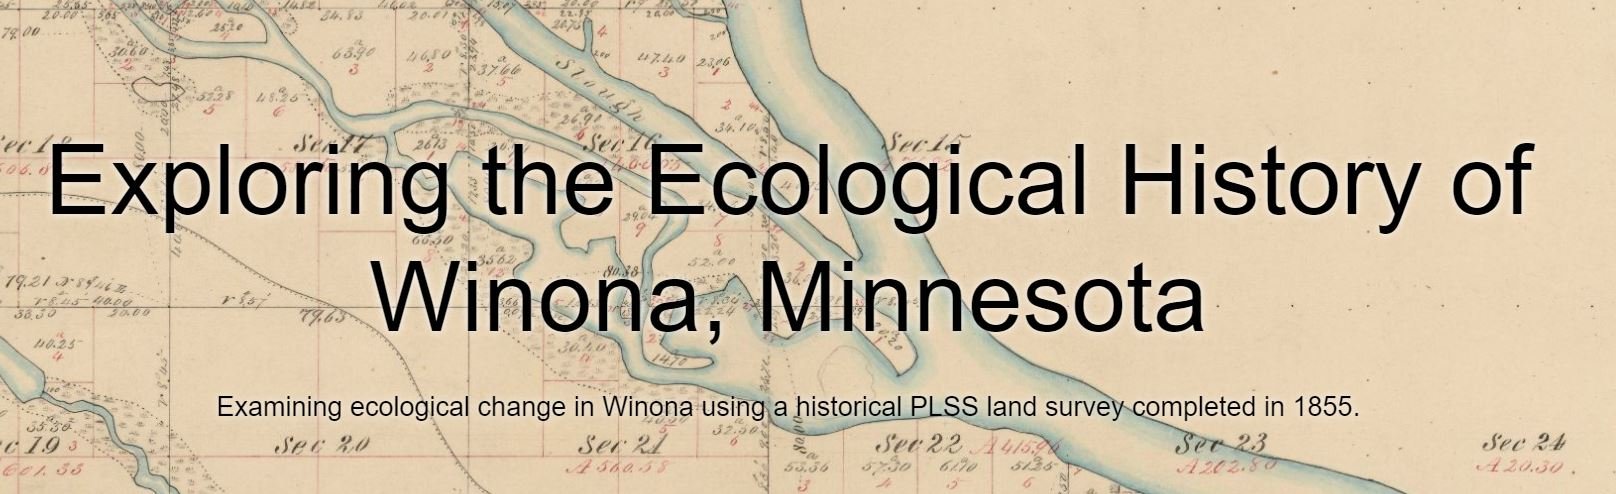 EXPLORING THE ECOLOGICAL HISTORY OF WINONA, MINNESOTA